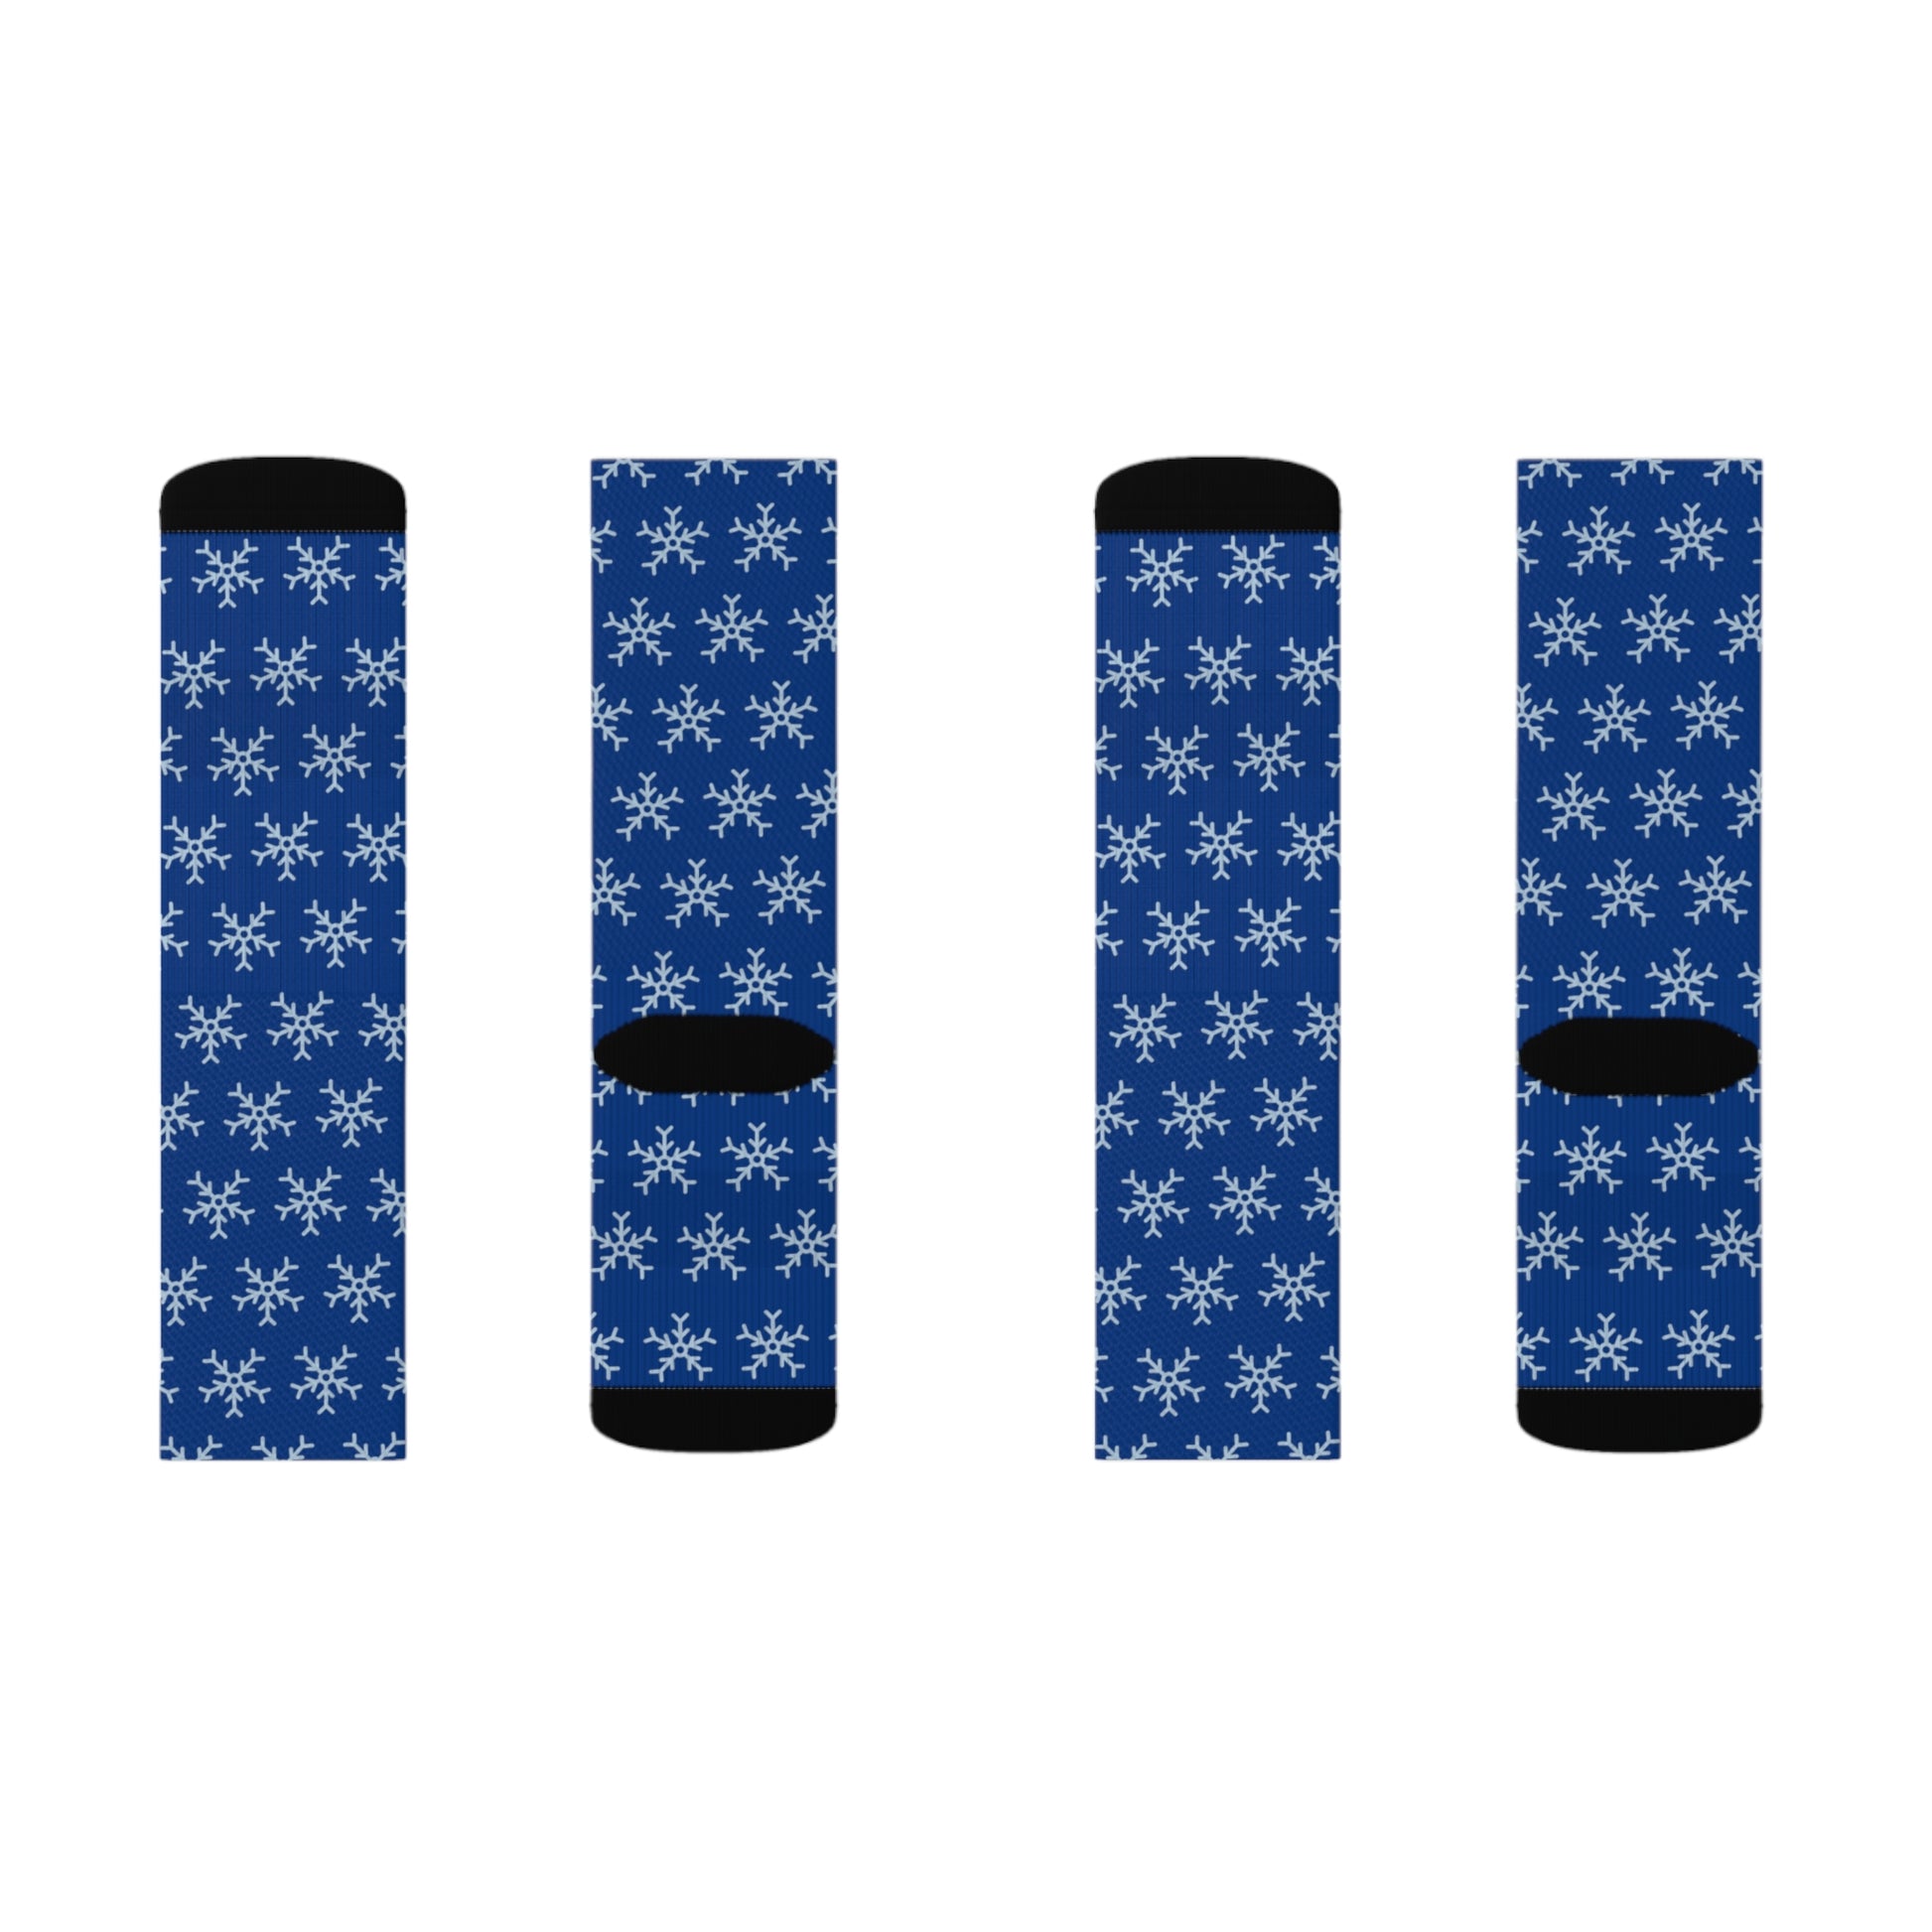 A pair of blue tube socks with stars on them.
Product Name: Blue Tube Socks: 3 sizes; Polyester blend; Snowflake design
Brand Name: Printify